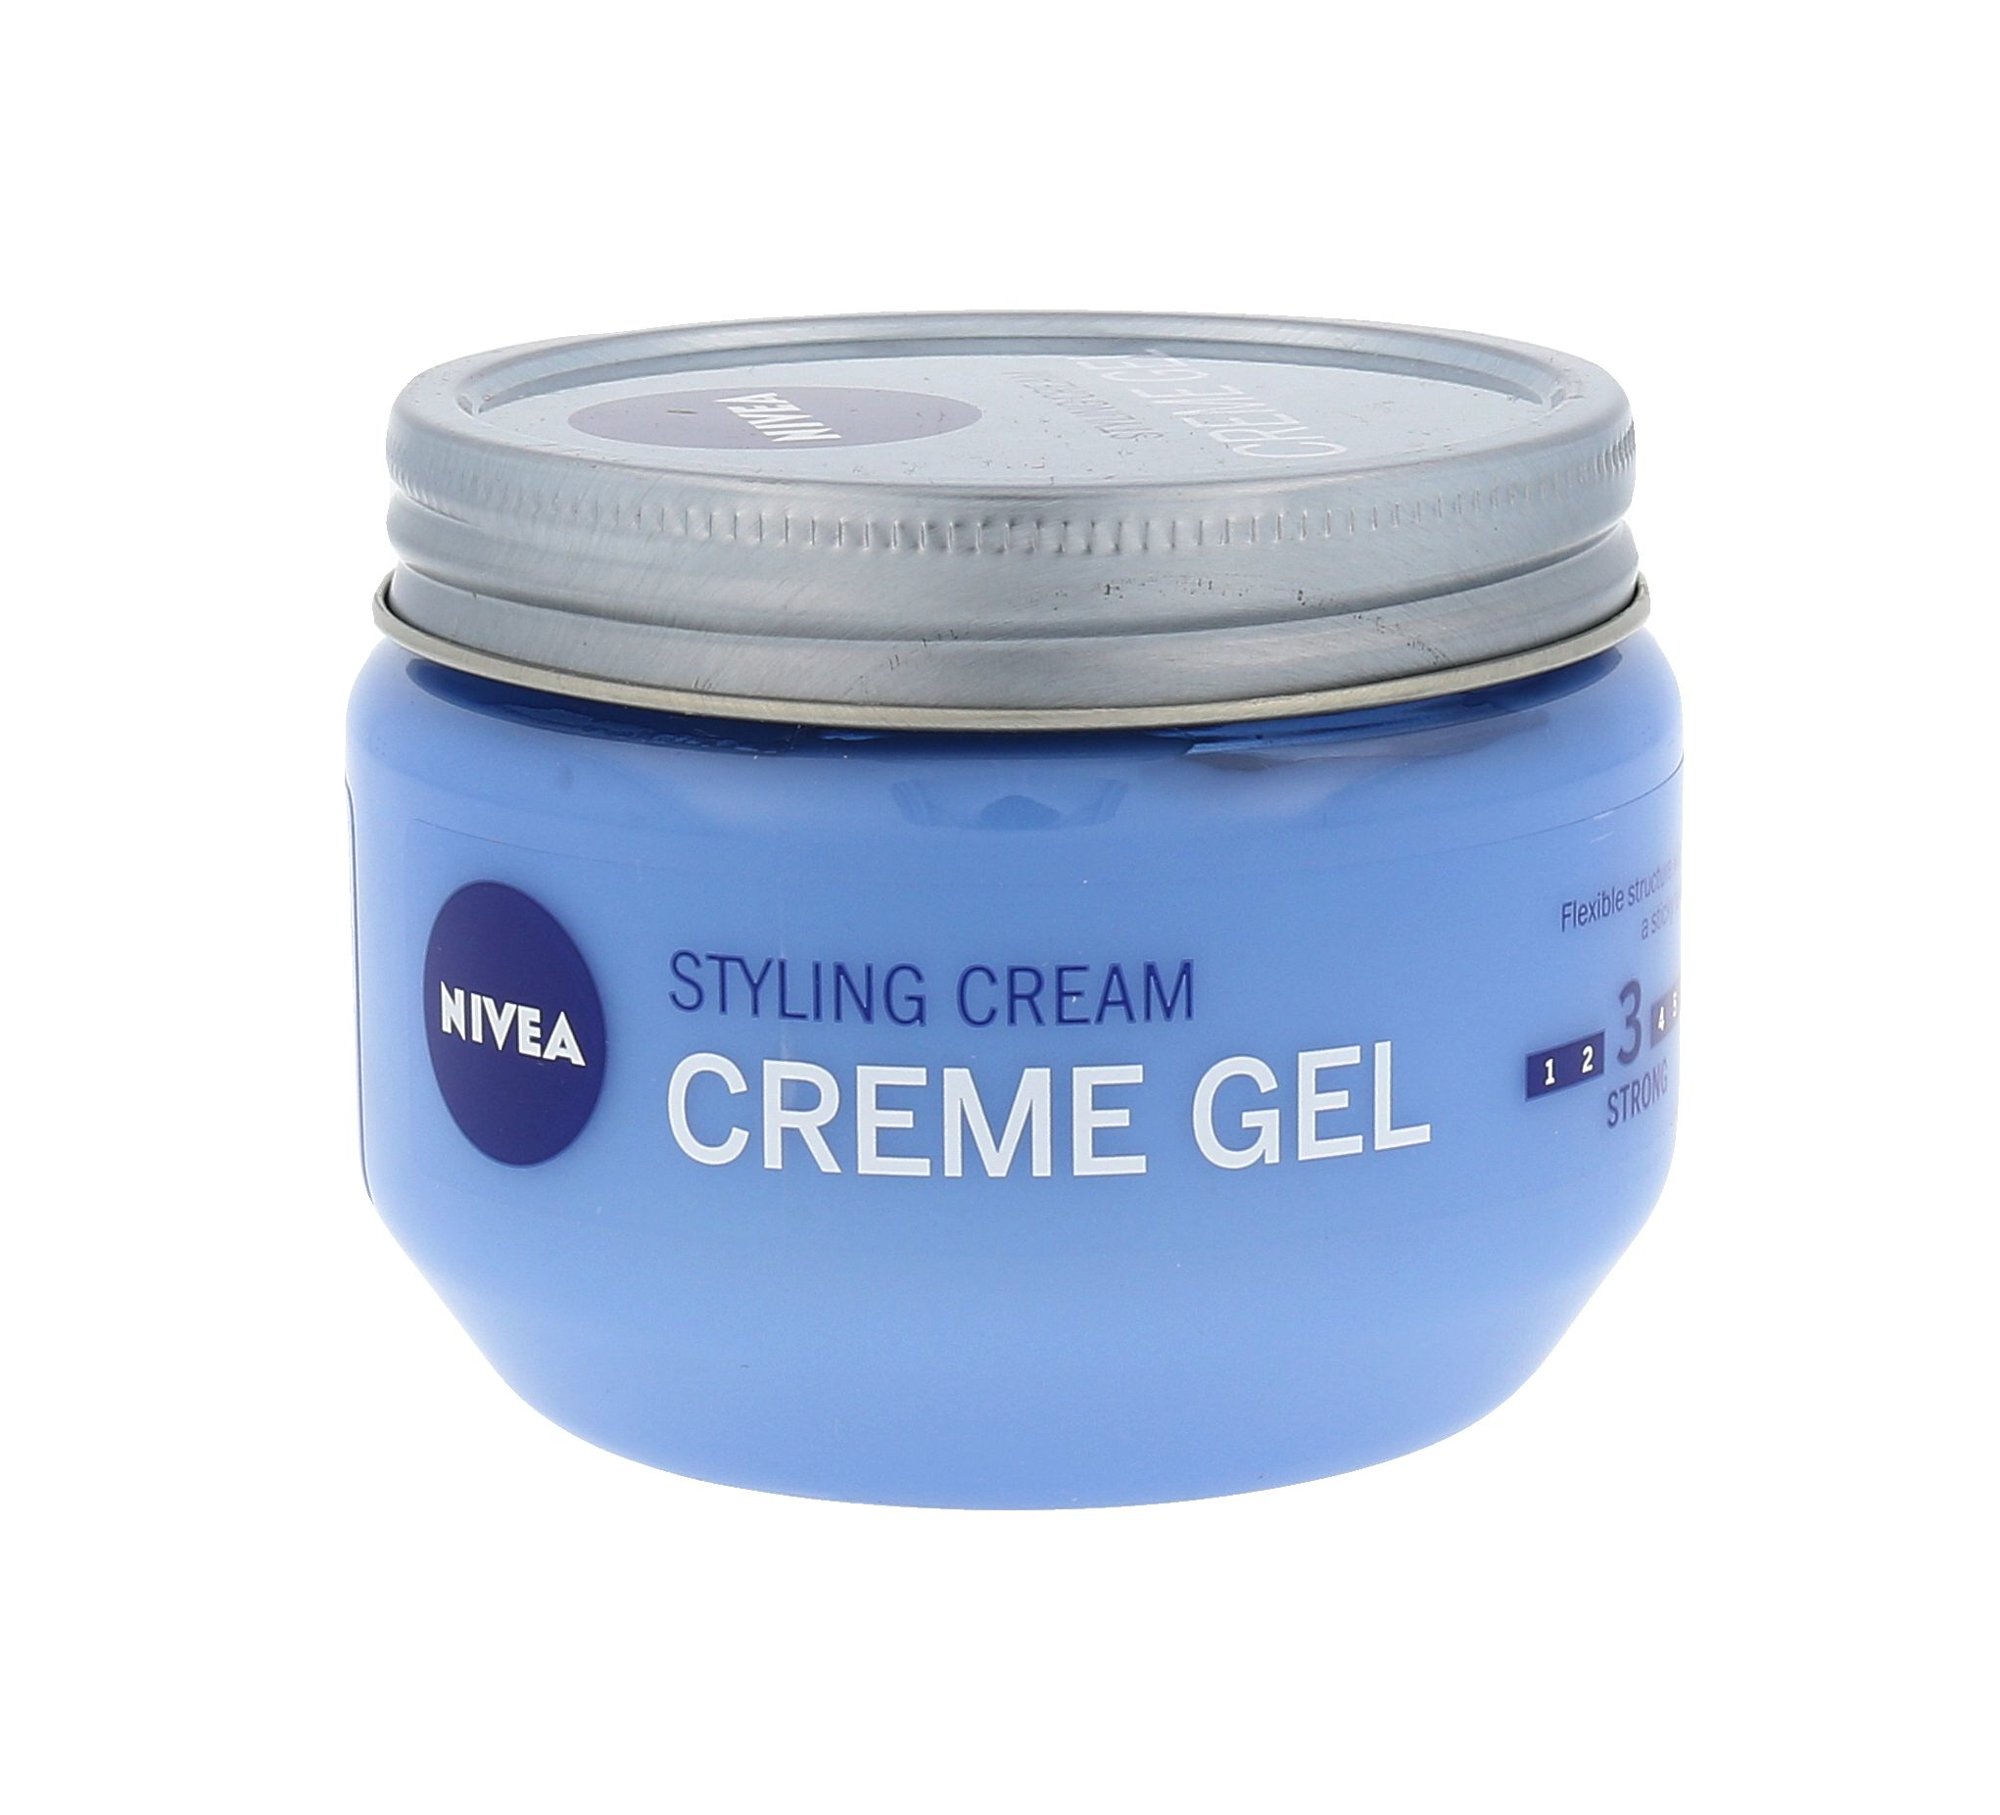 Nivea Styling Cream Creme Gel